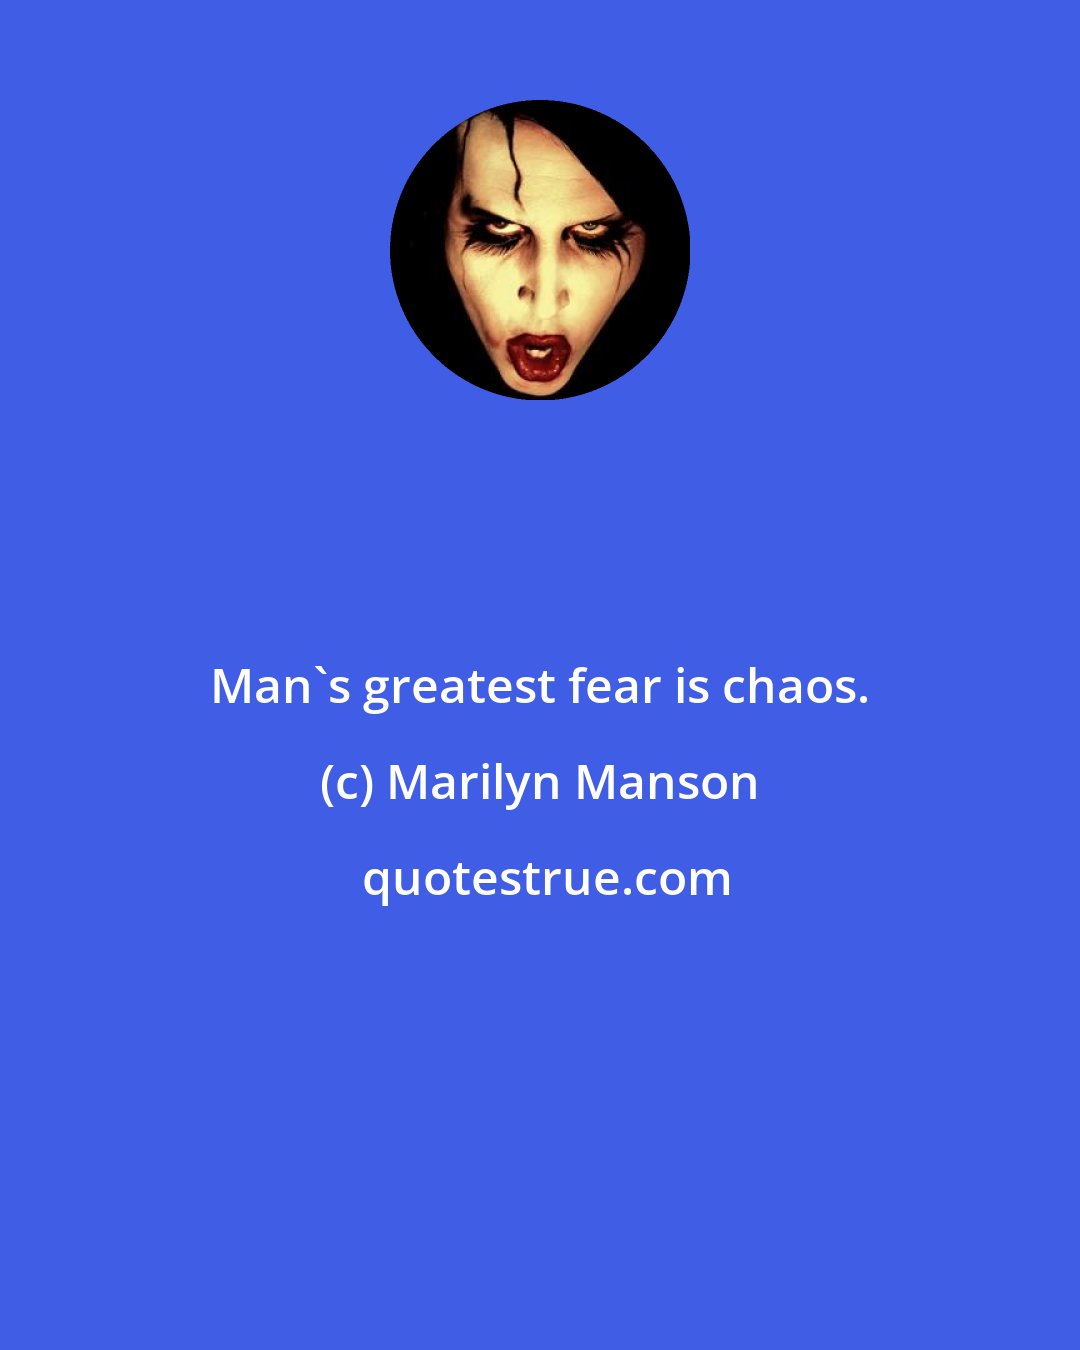 Marilyn Manson: Man's greatest fear is chaos.